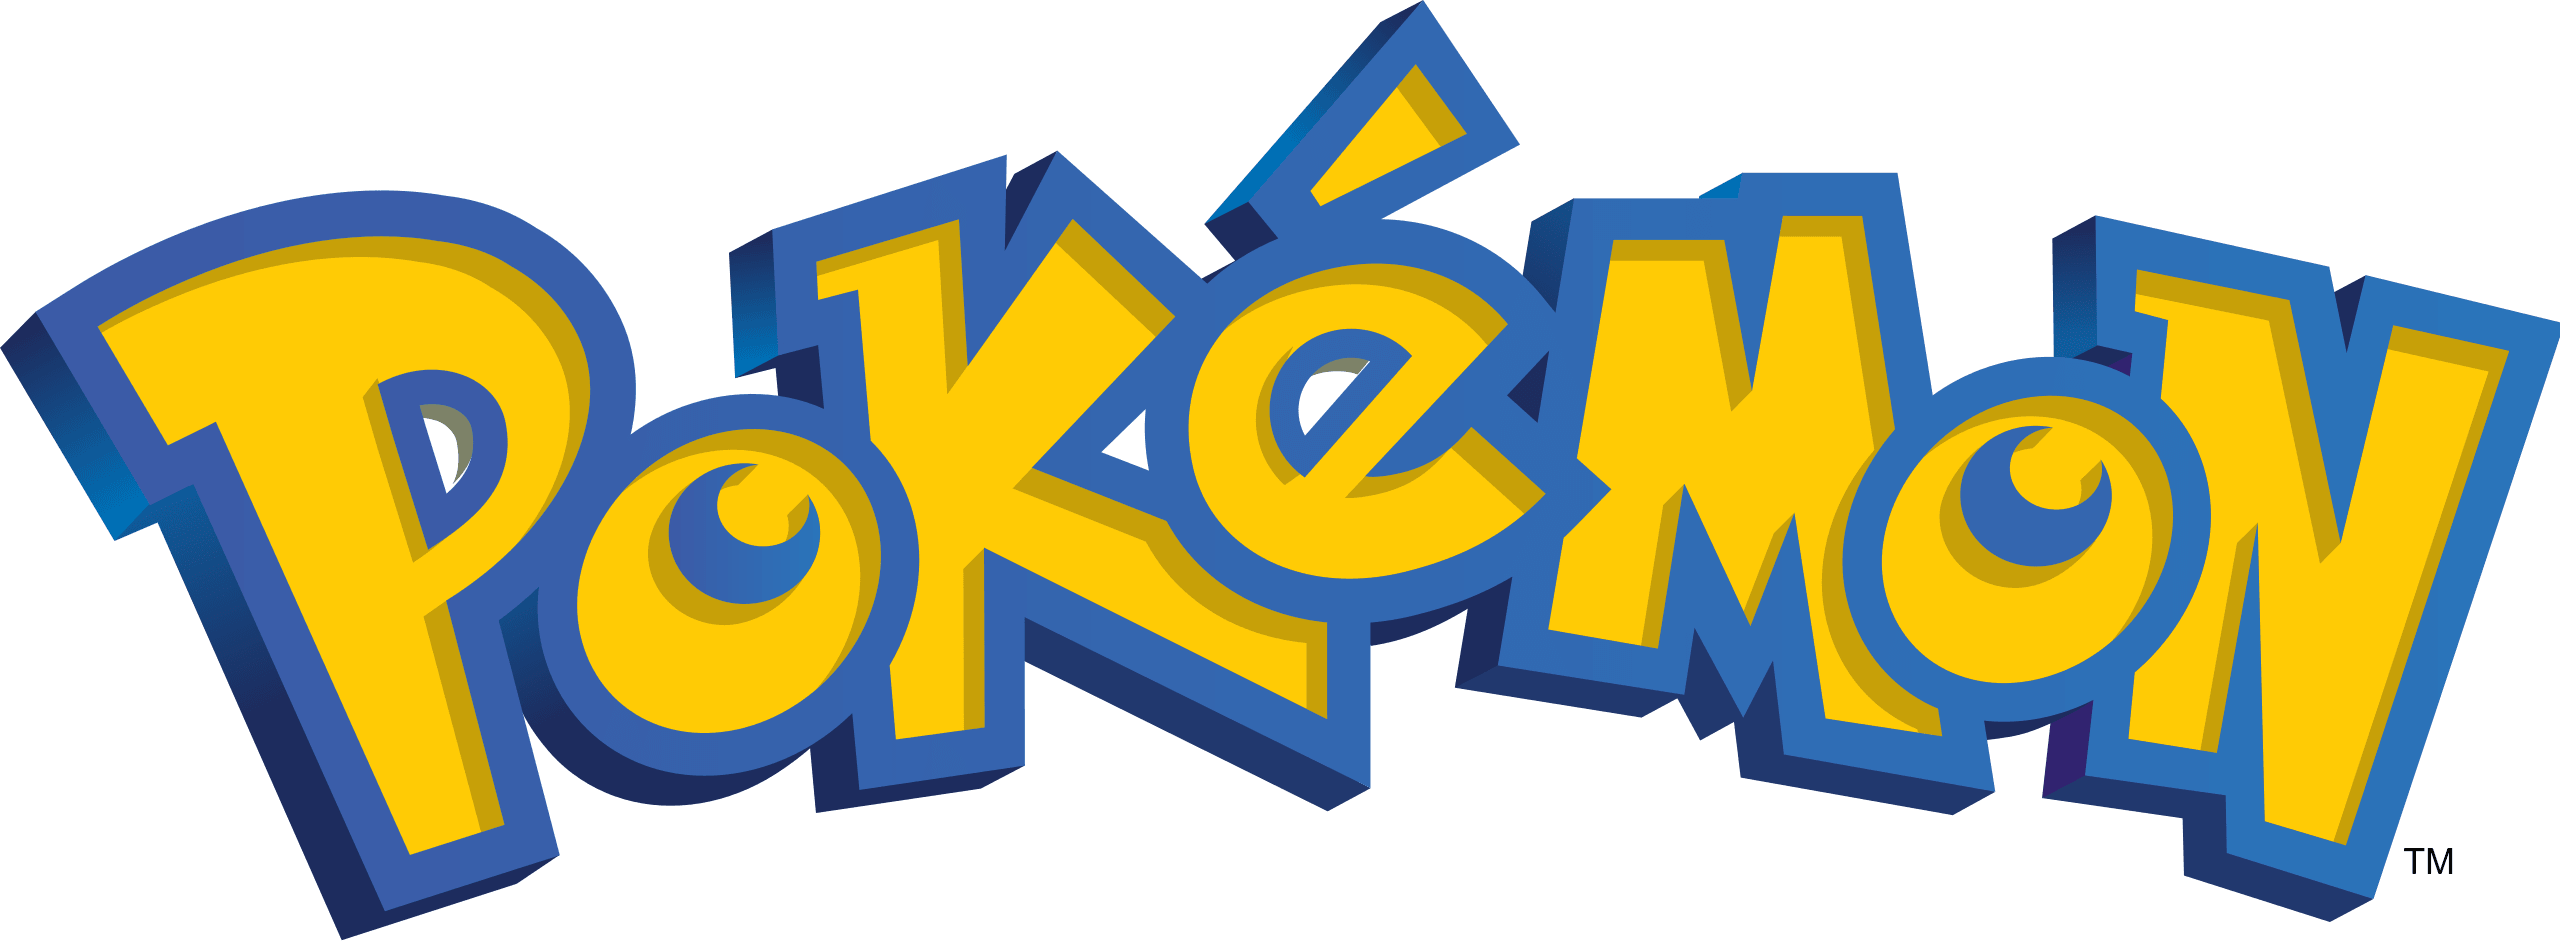 Pokemon Booster Box (36 Packs) - Scarlet & Violet - Paldea Evolved - Hobby Champion Inc